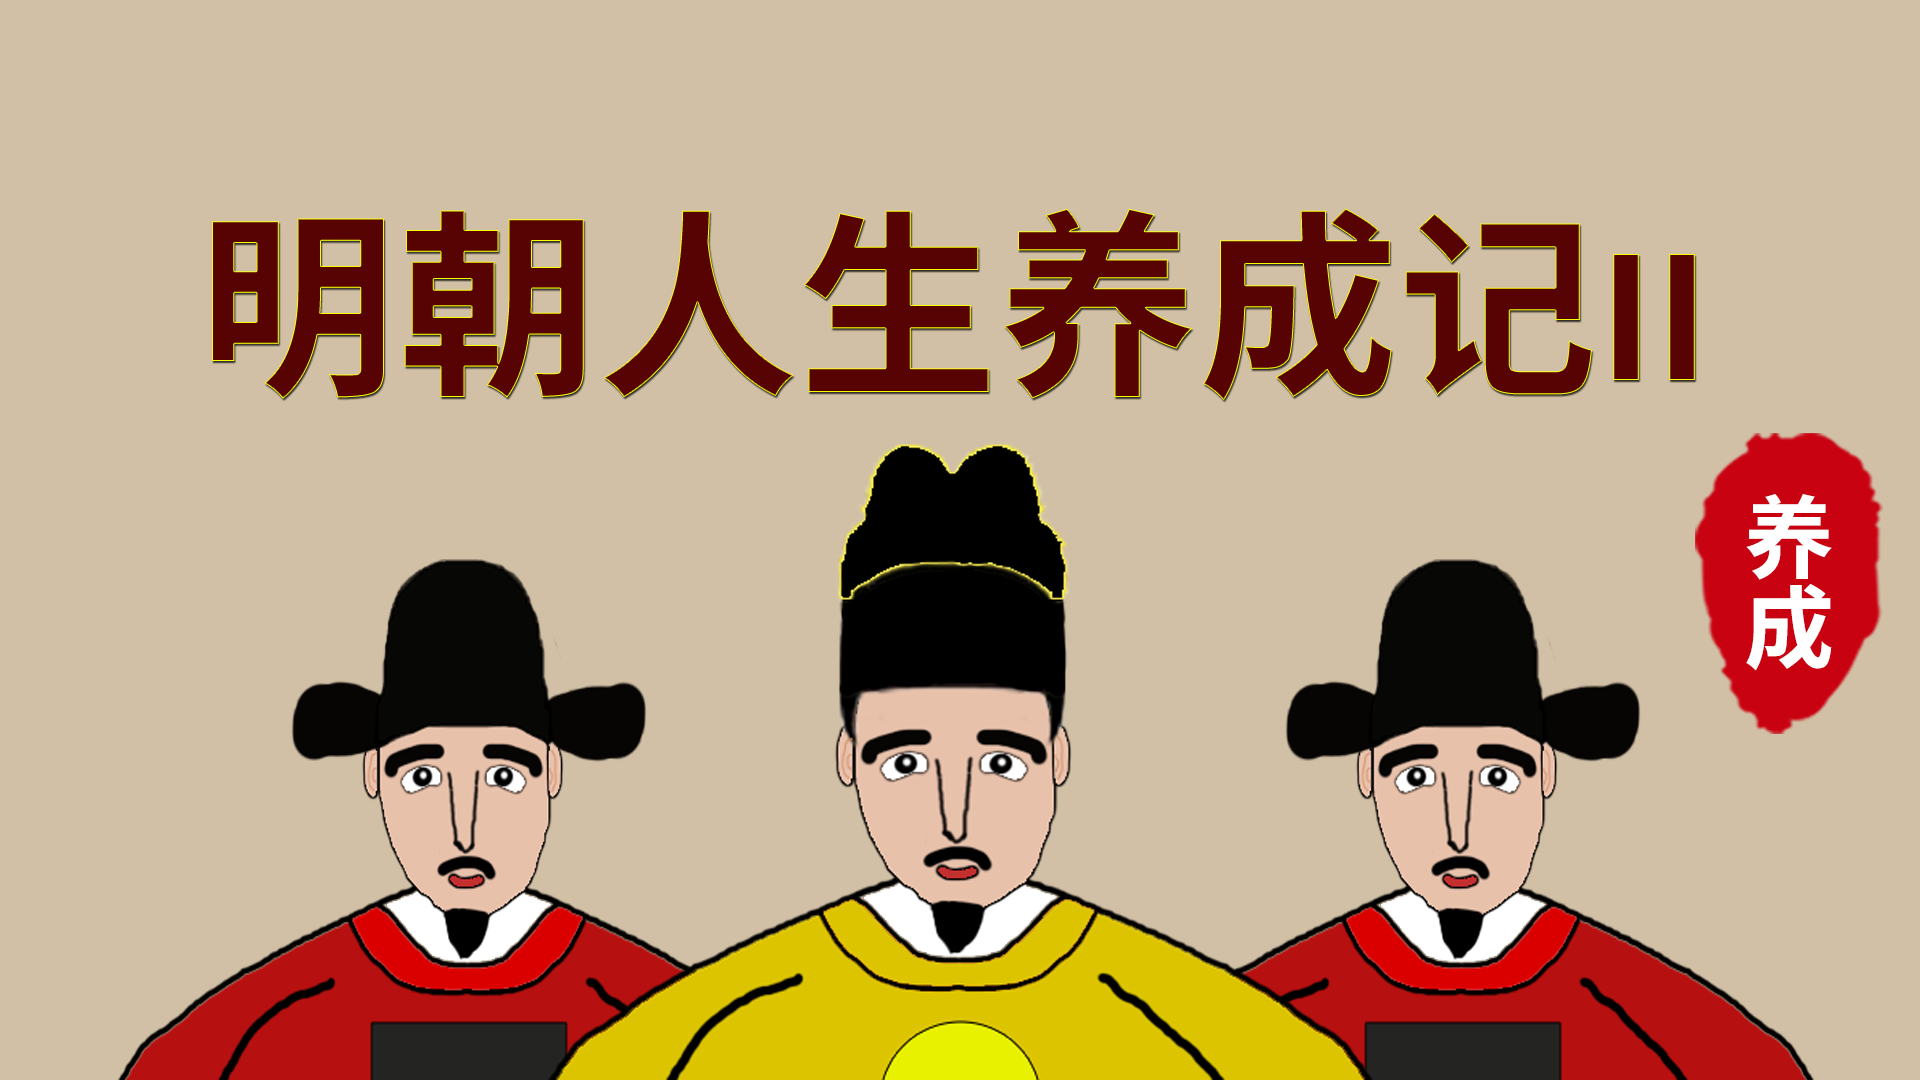 Banner of История развития жизни династии Мин 2 